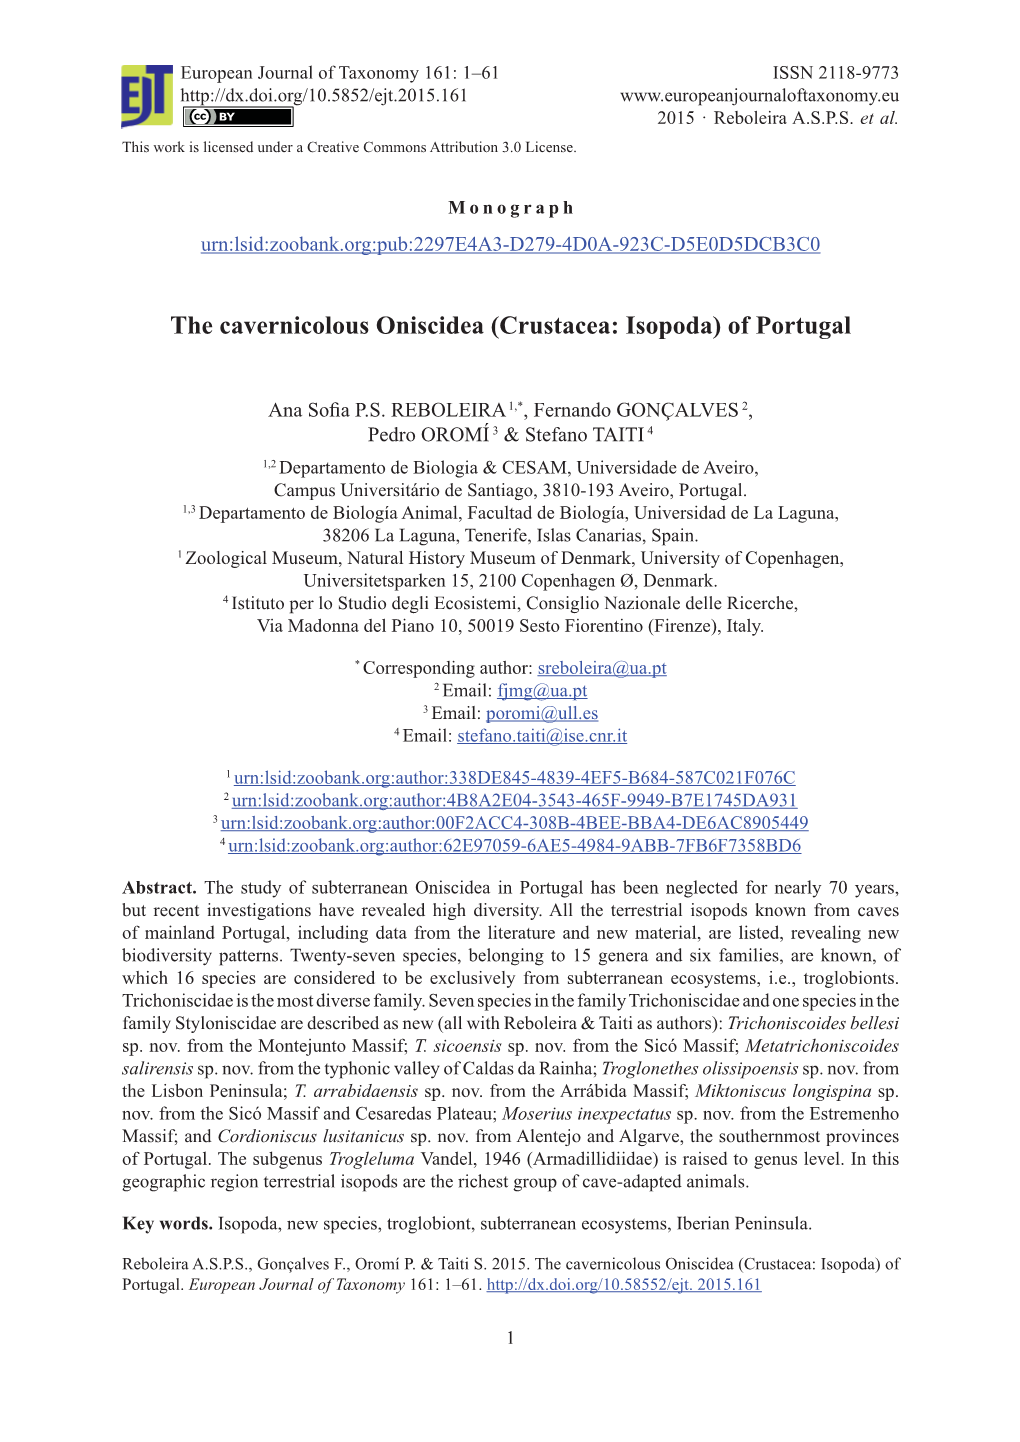 The Cavernicolous Oniscidea (Crustacea: Isopoda) of Portugal